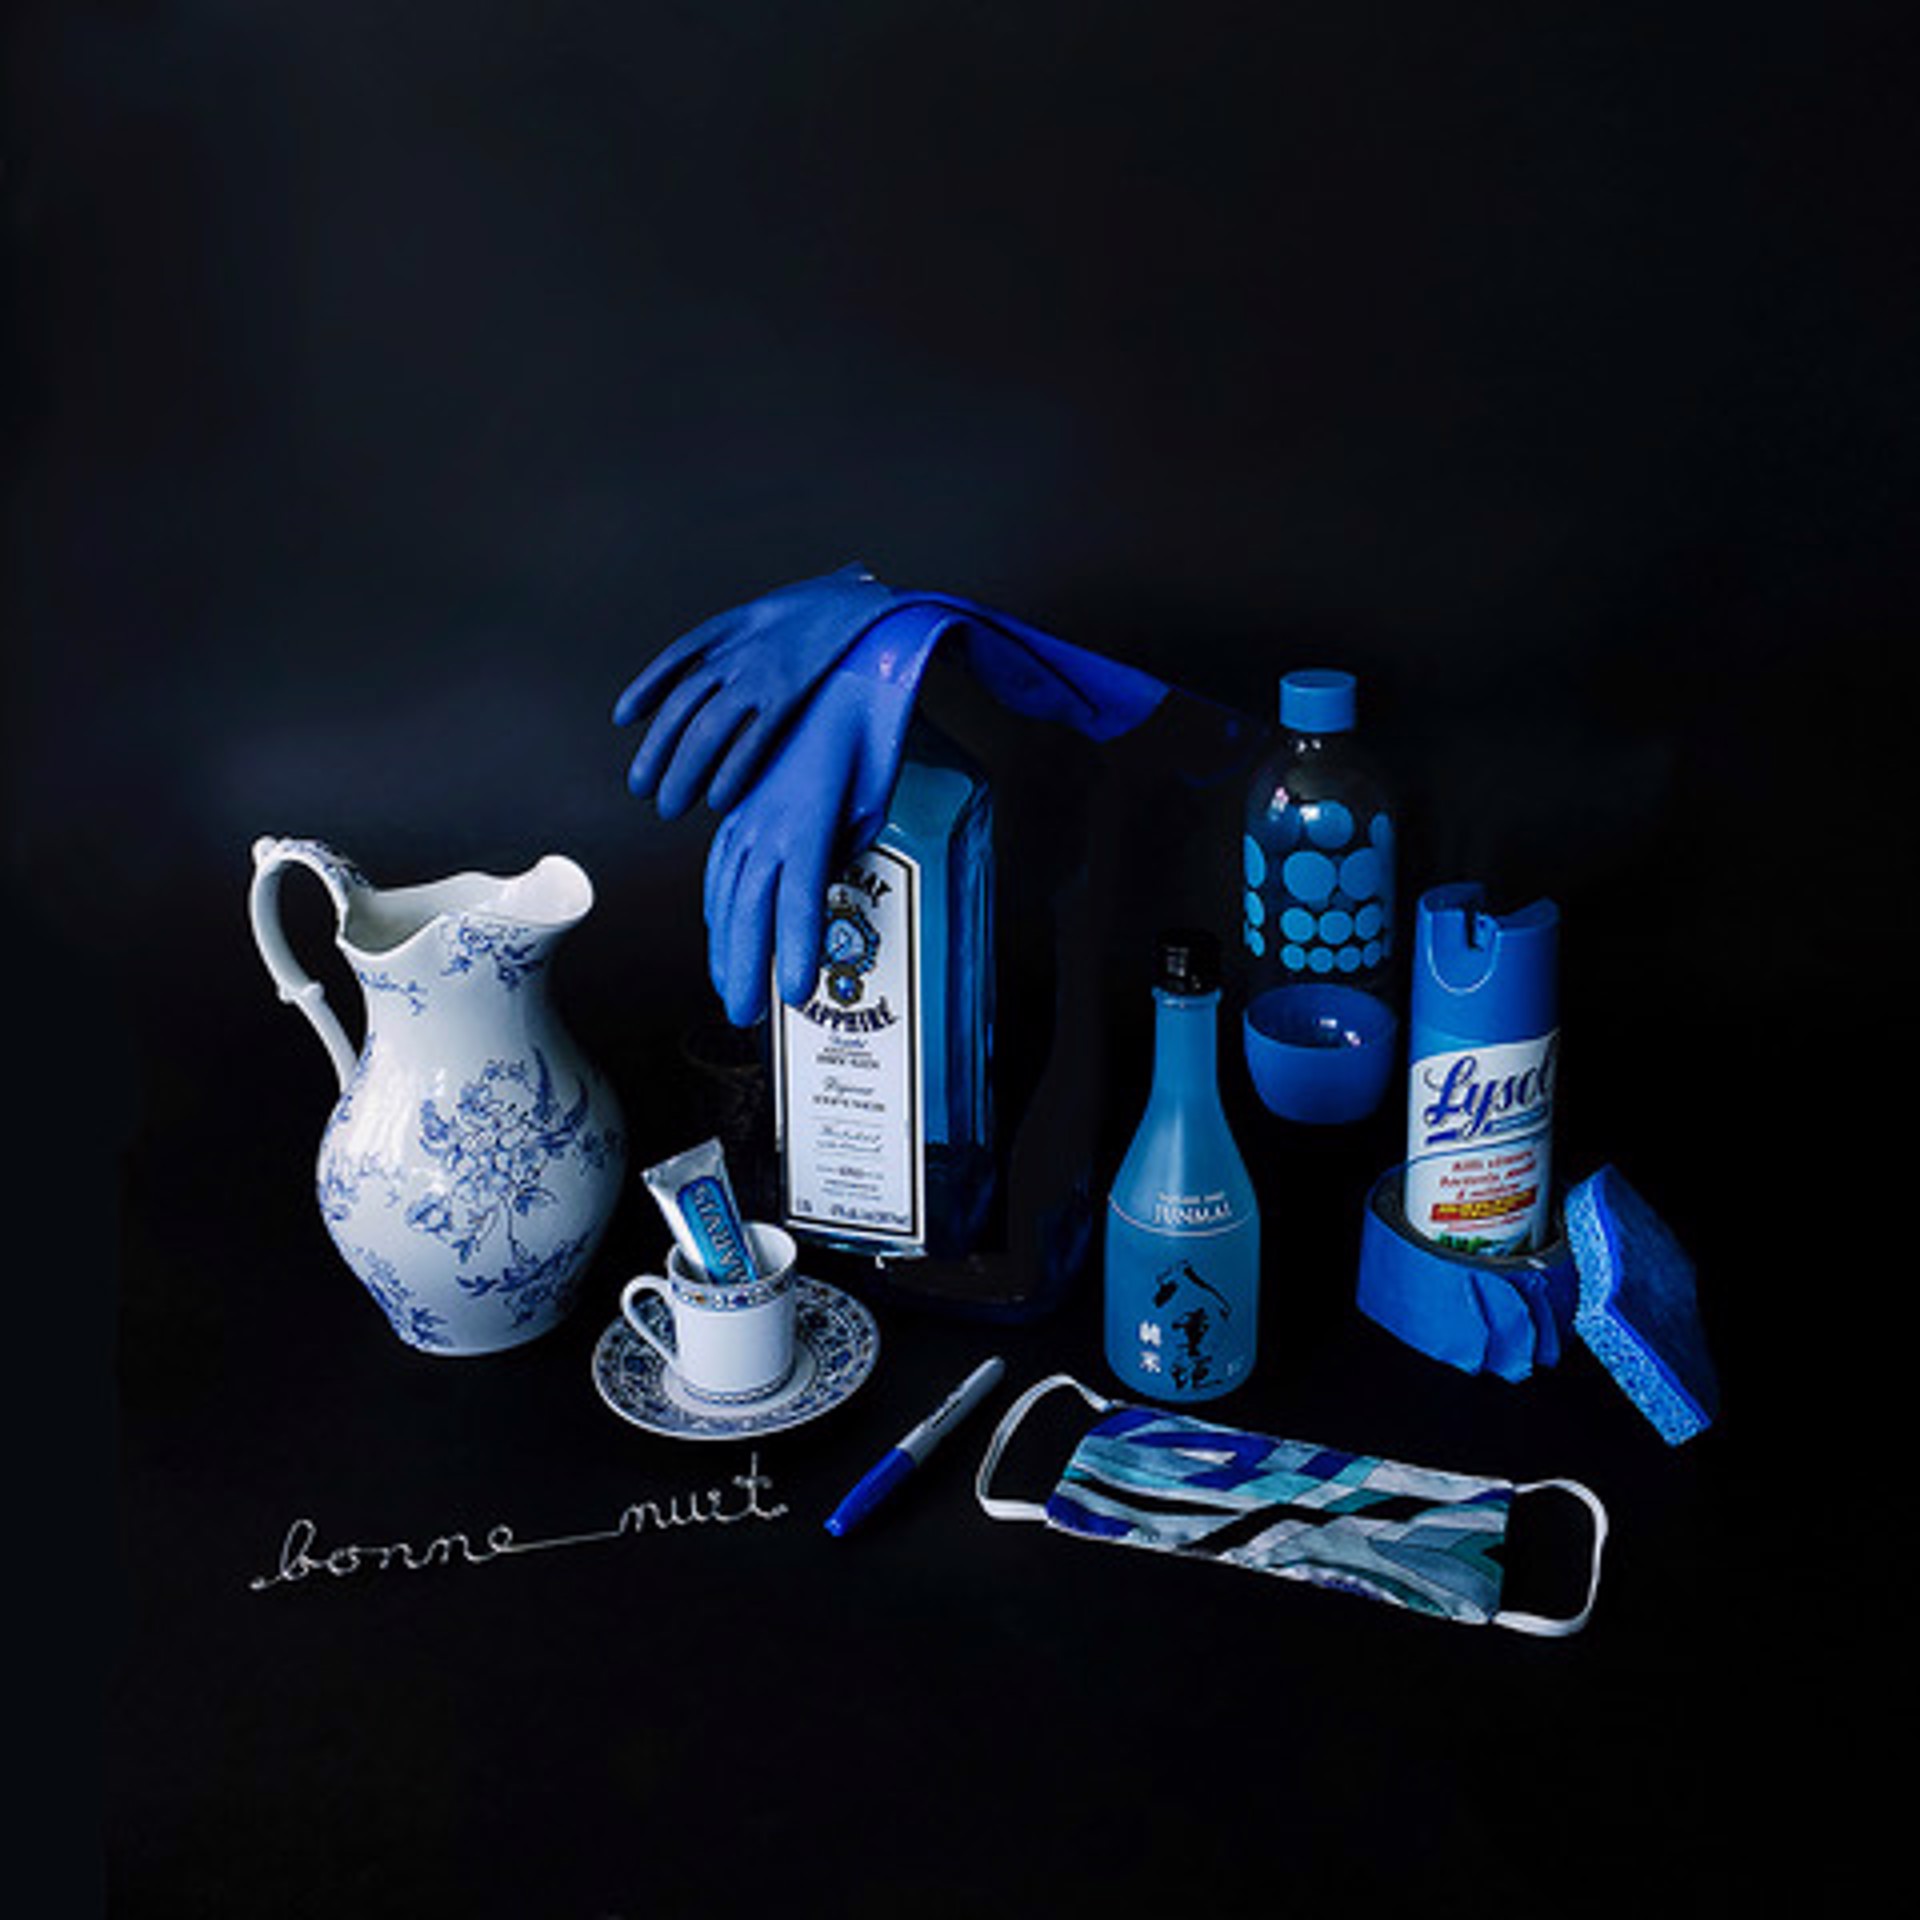 Feeling Blue by Nathalie Seaver